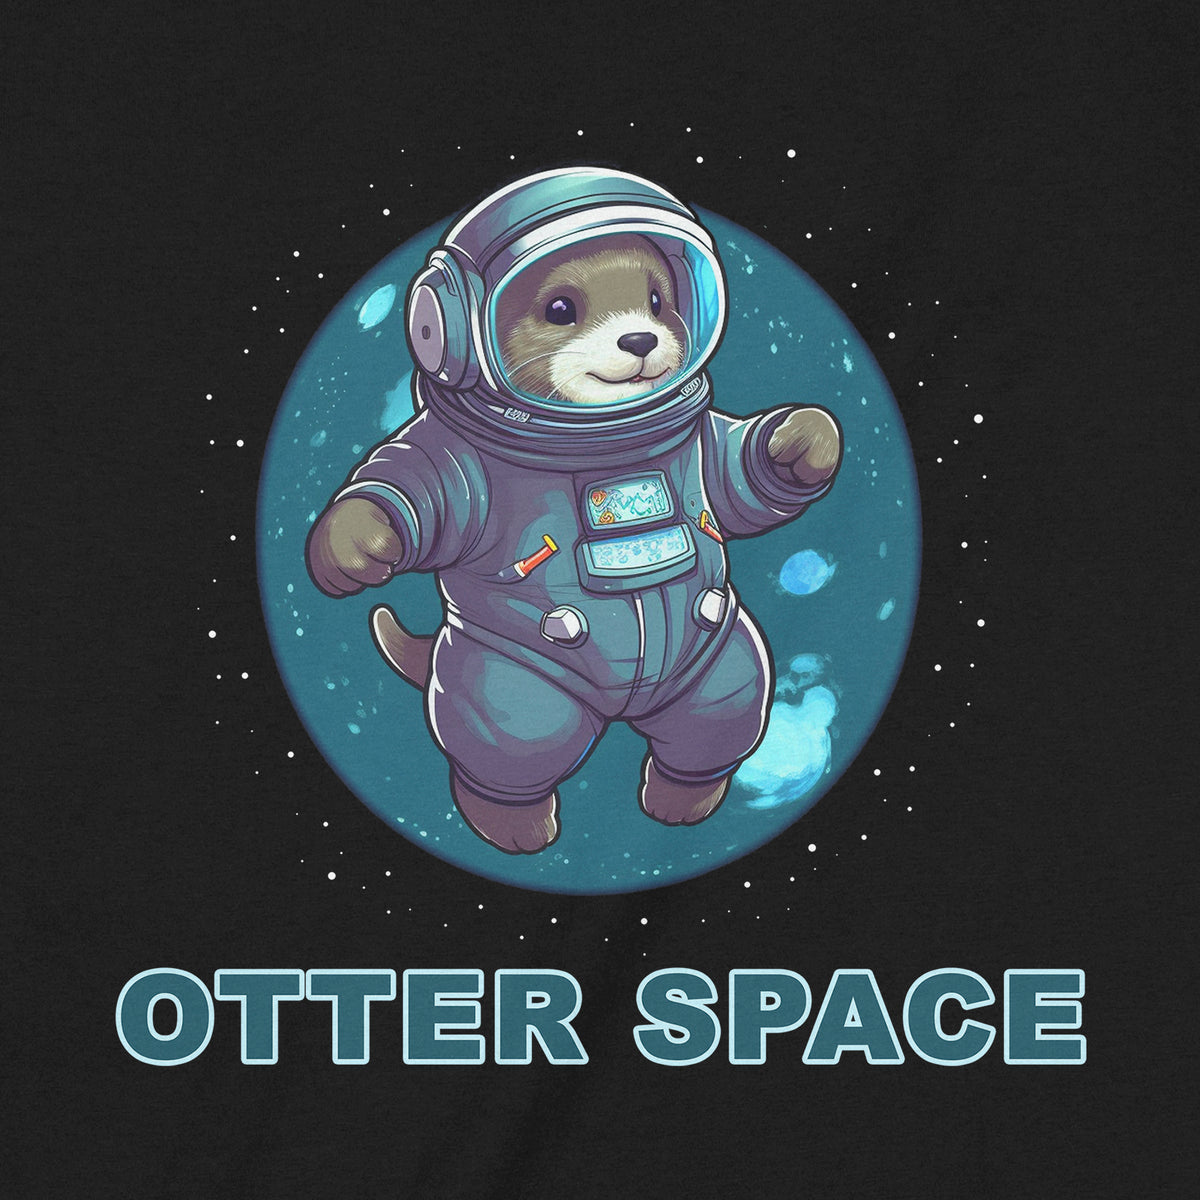 "Otter Space" Premium Midweight Ringspun Cotton T-Shirt - Mens/Womens Fits